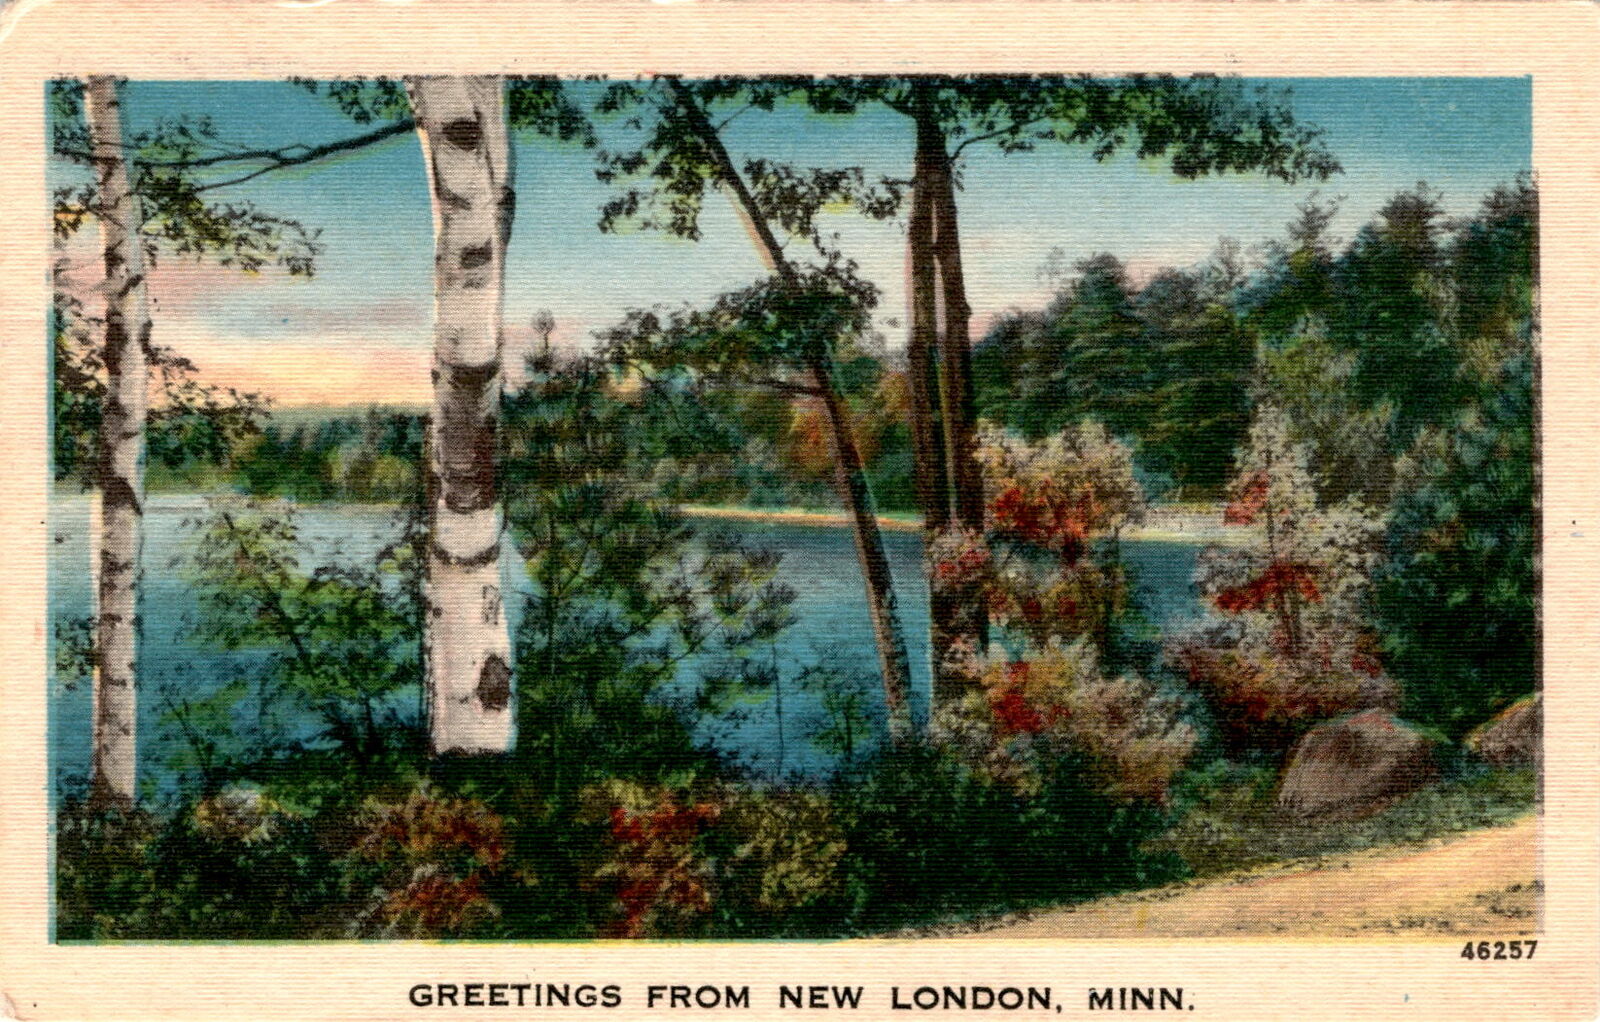 New London, Minnesota, August 11, 1955, 5:30 PM, hot Postcard